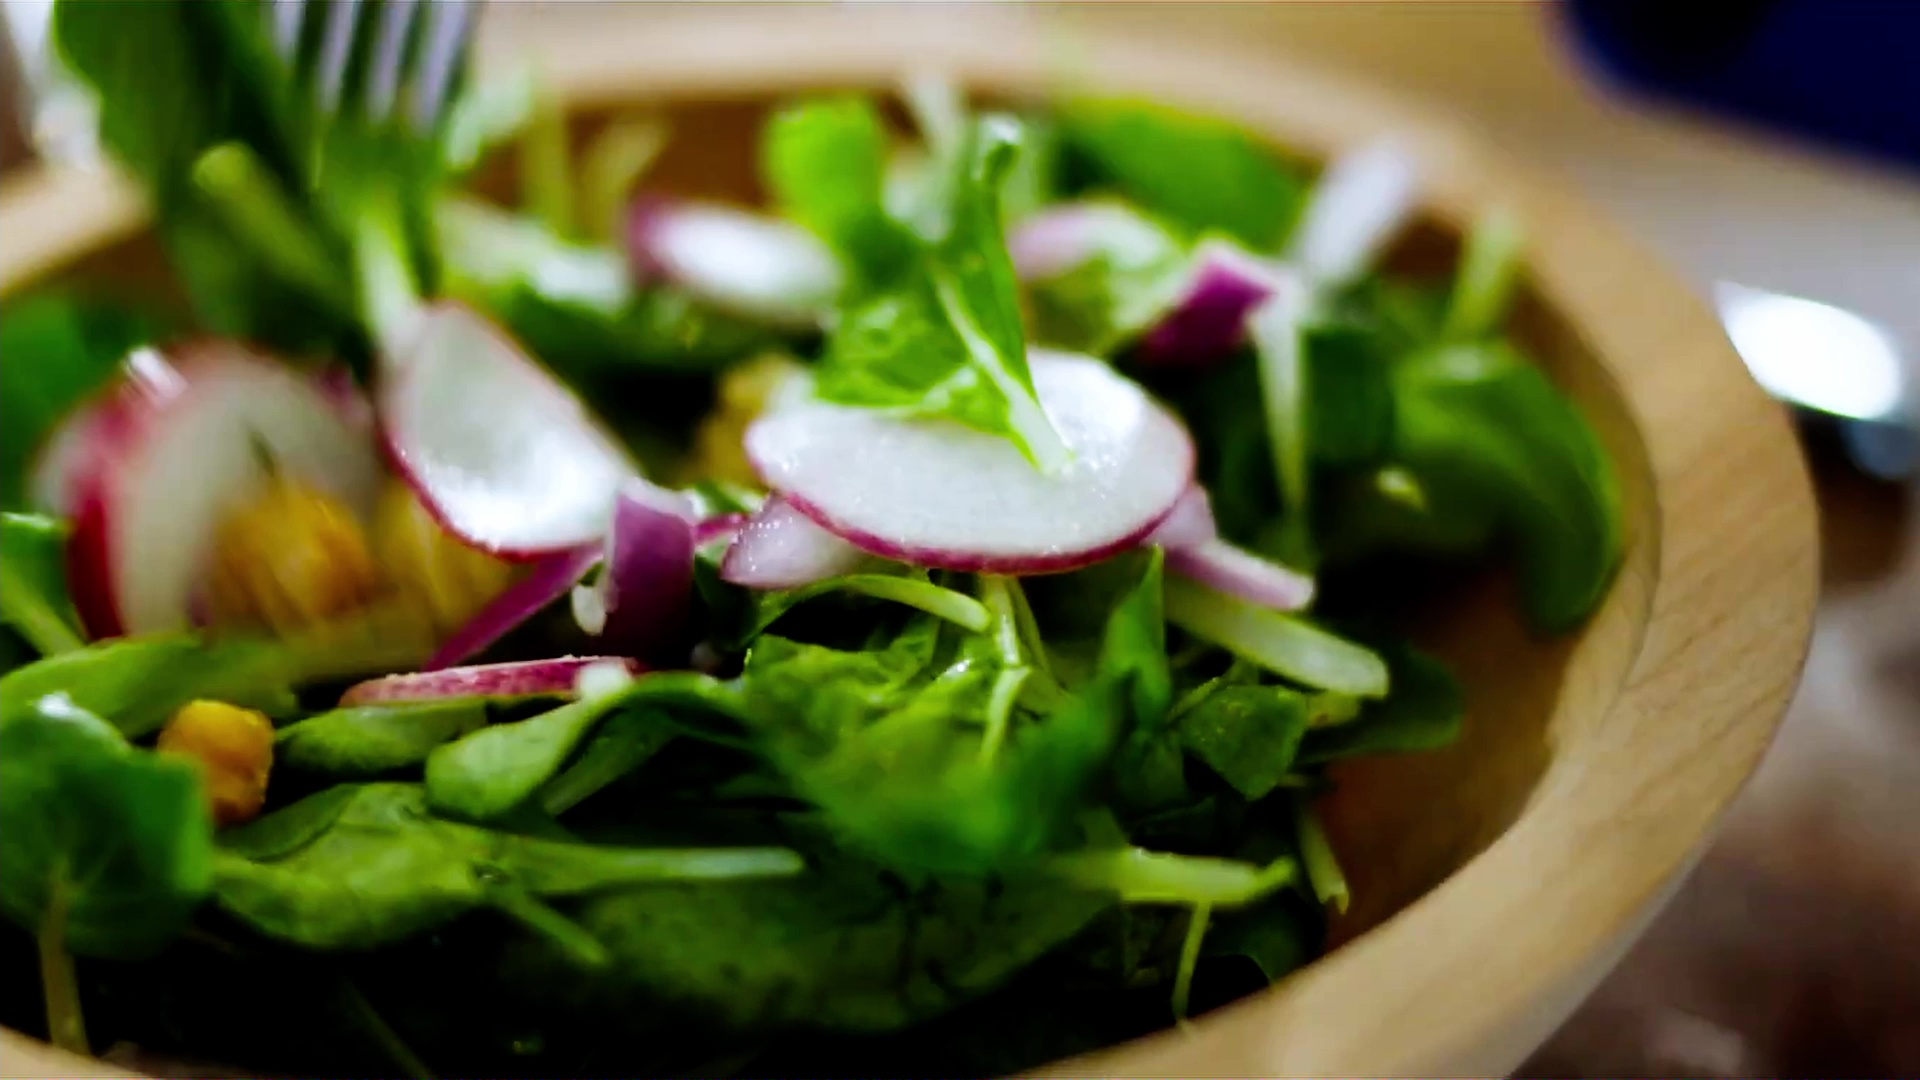 Salad using AeroFarms products